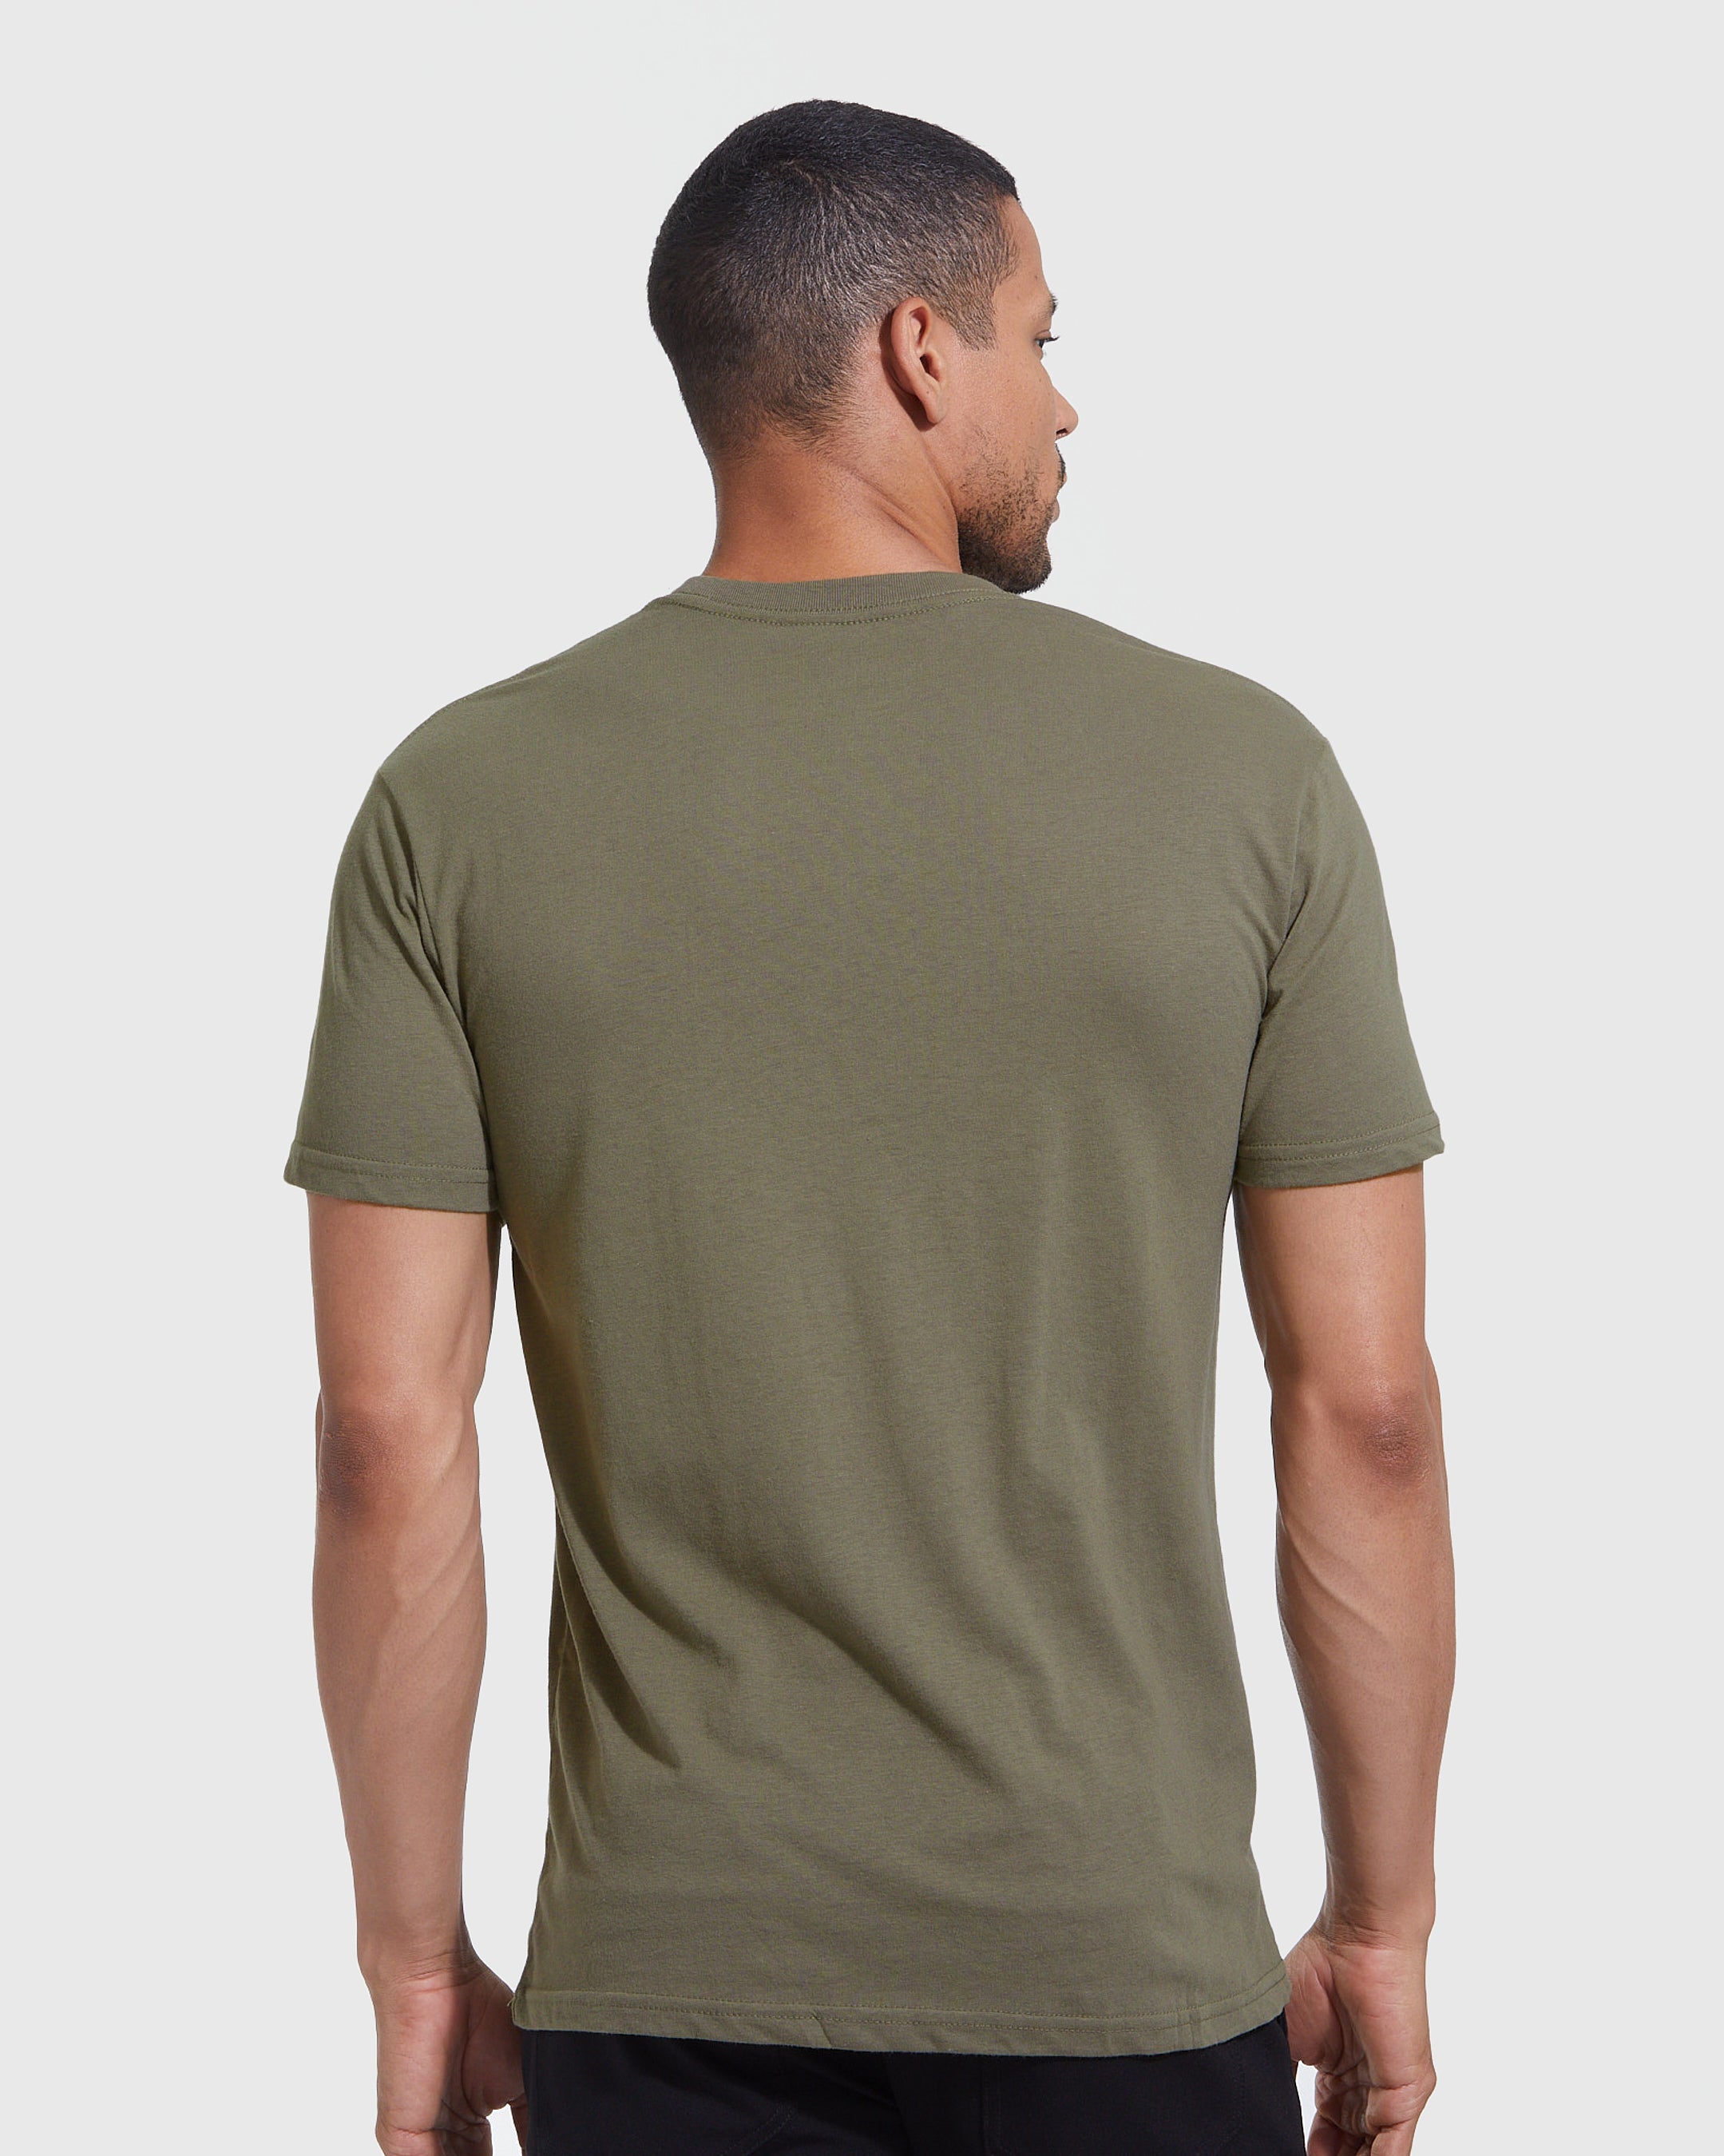 T-Shirt Crew – Military Green True Neck Classic